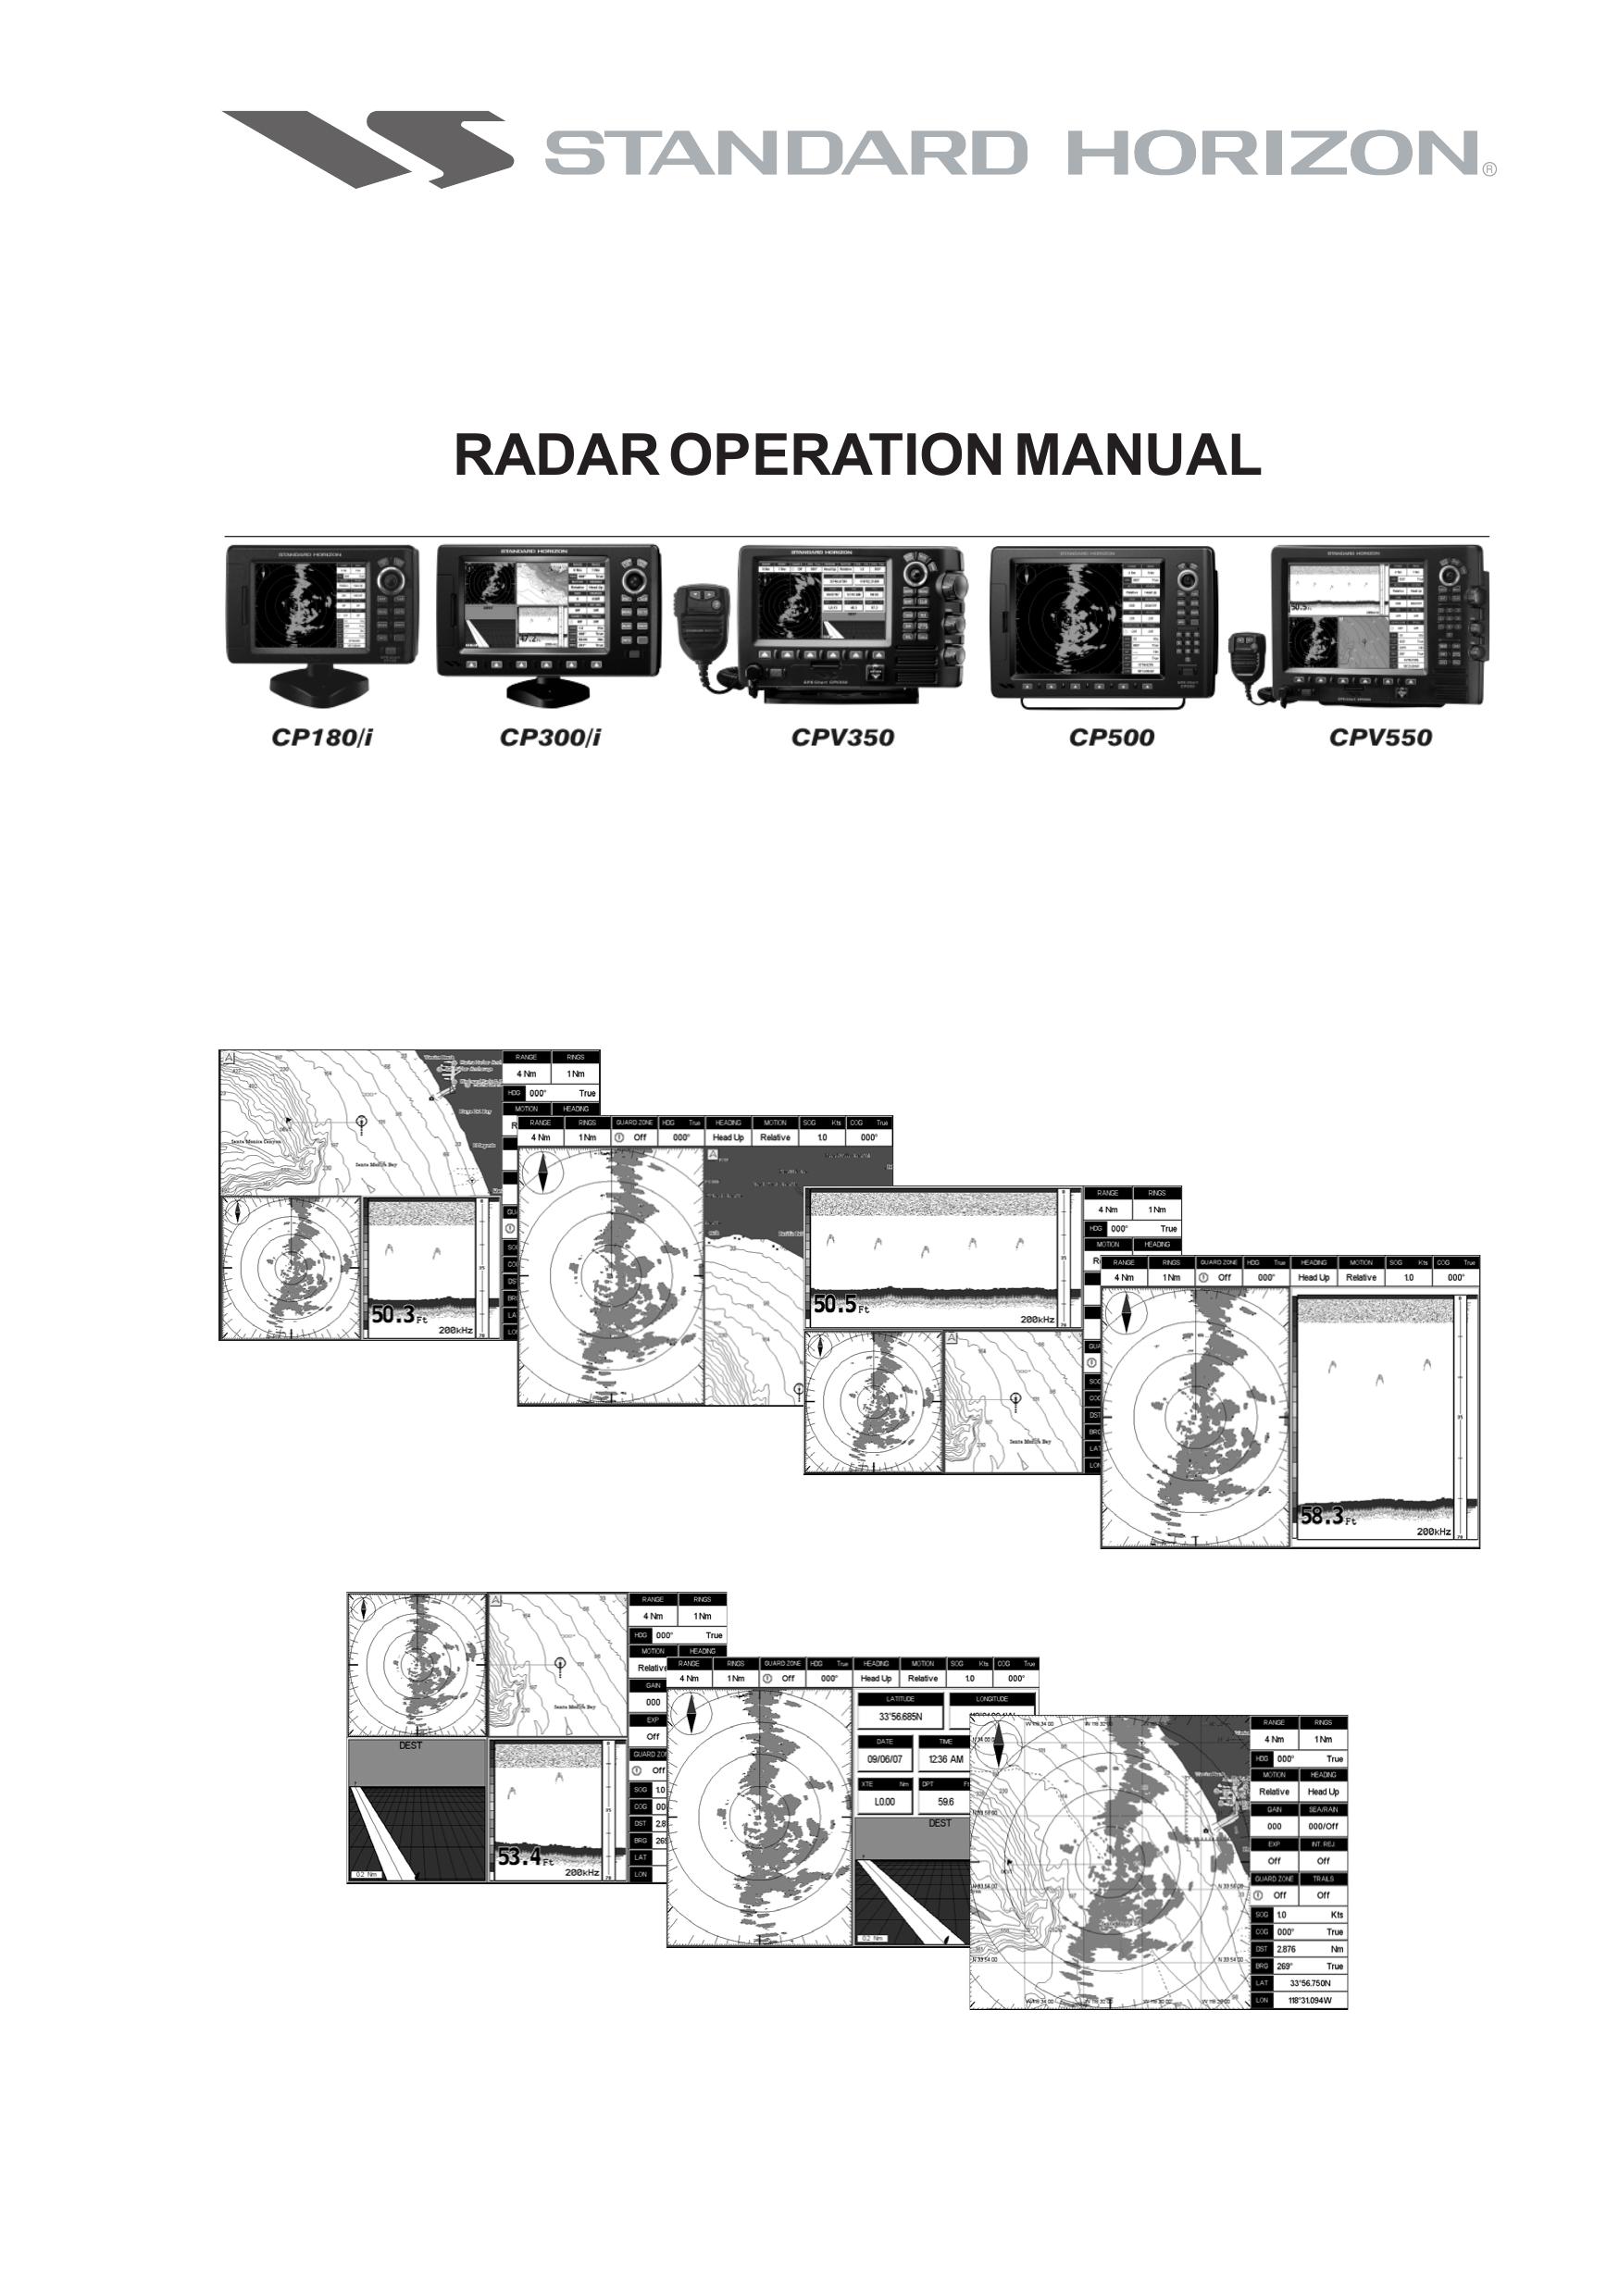 Standard Horizon CP500 Marine RADAR User Manual